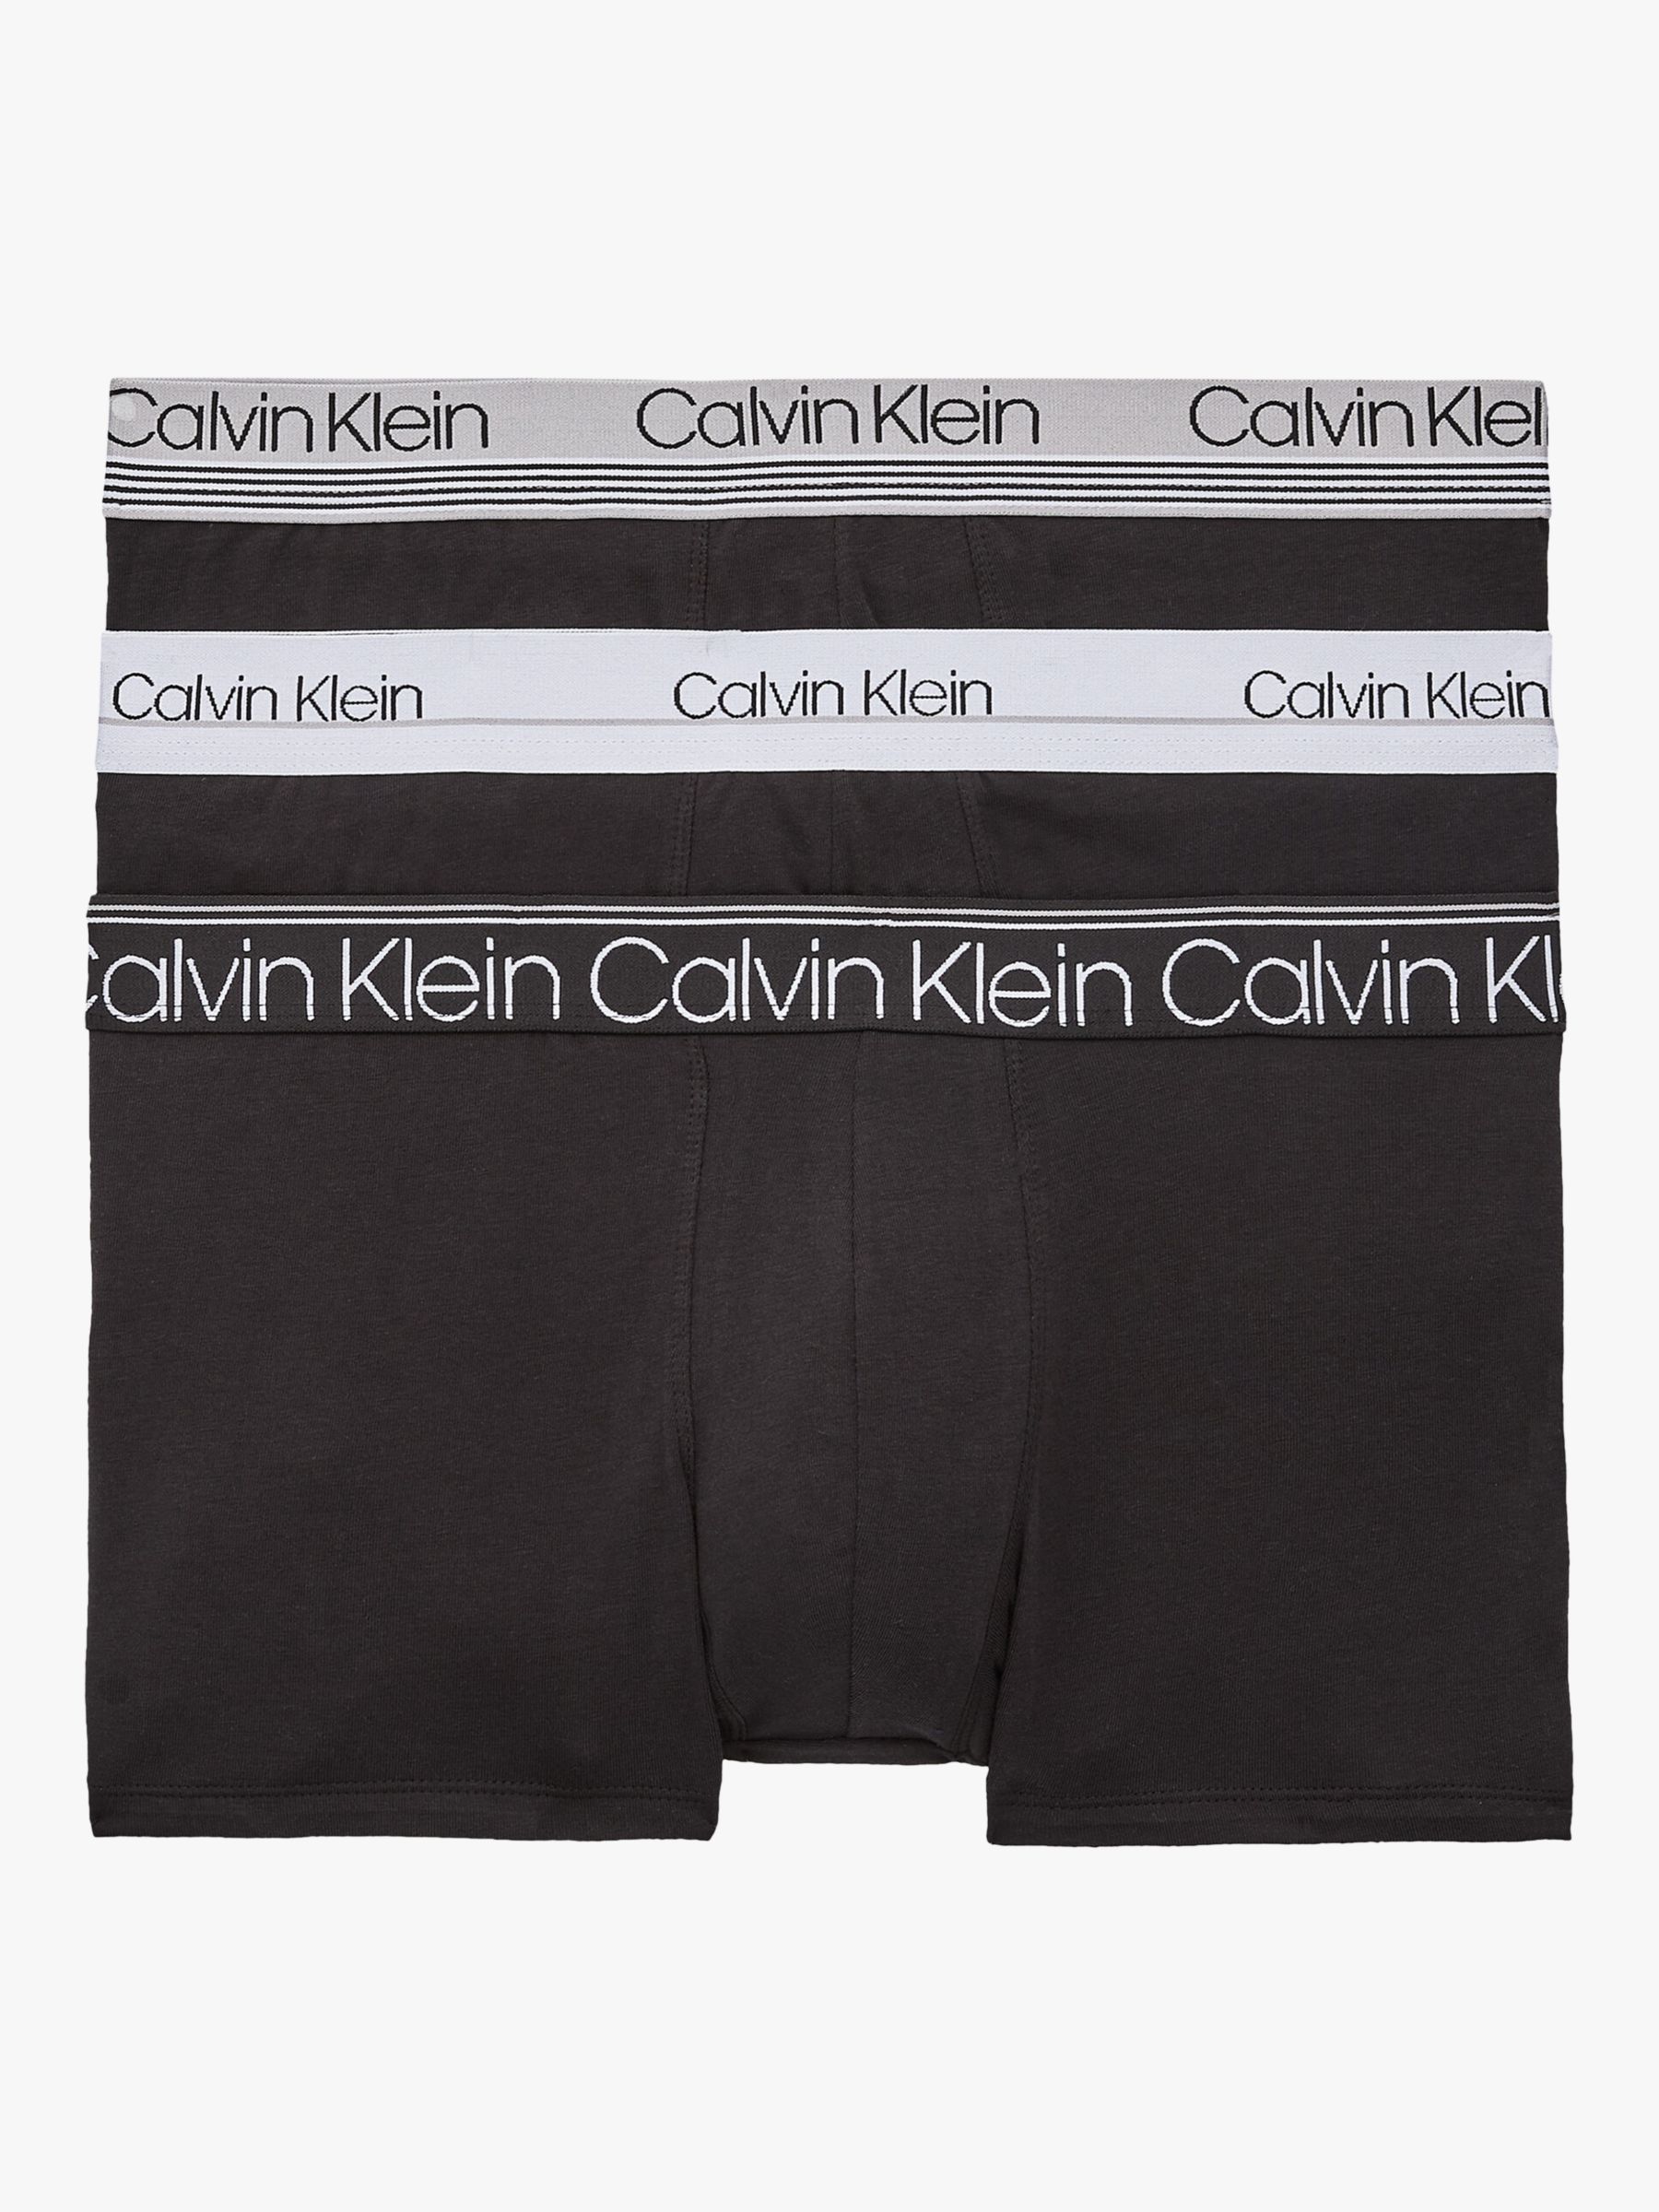 Calvin Klein Stretch Cotton Trunks, Pack of 3, White/Grey/Black at John ...